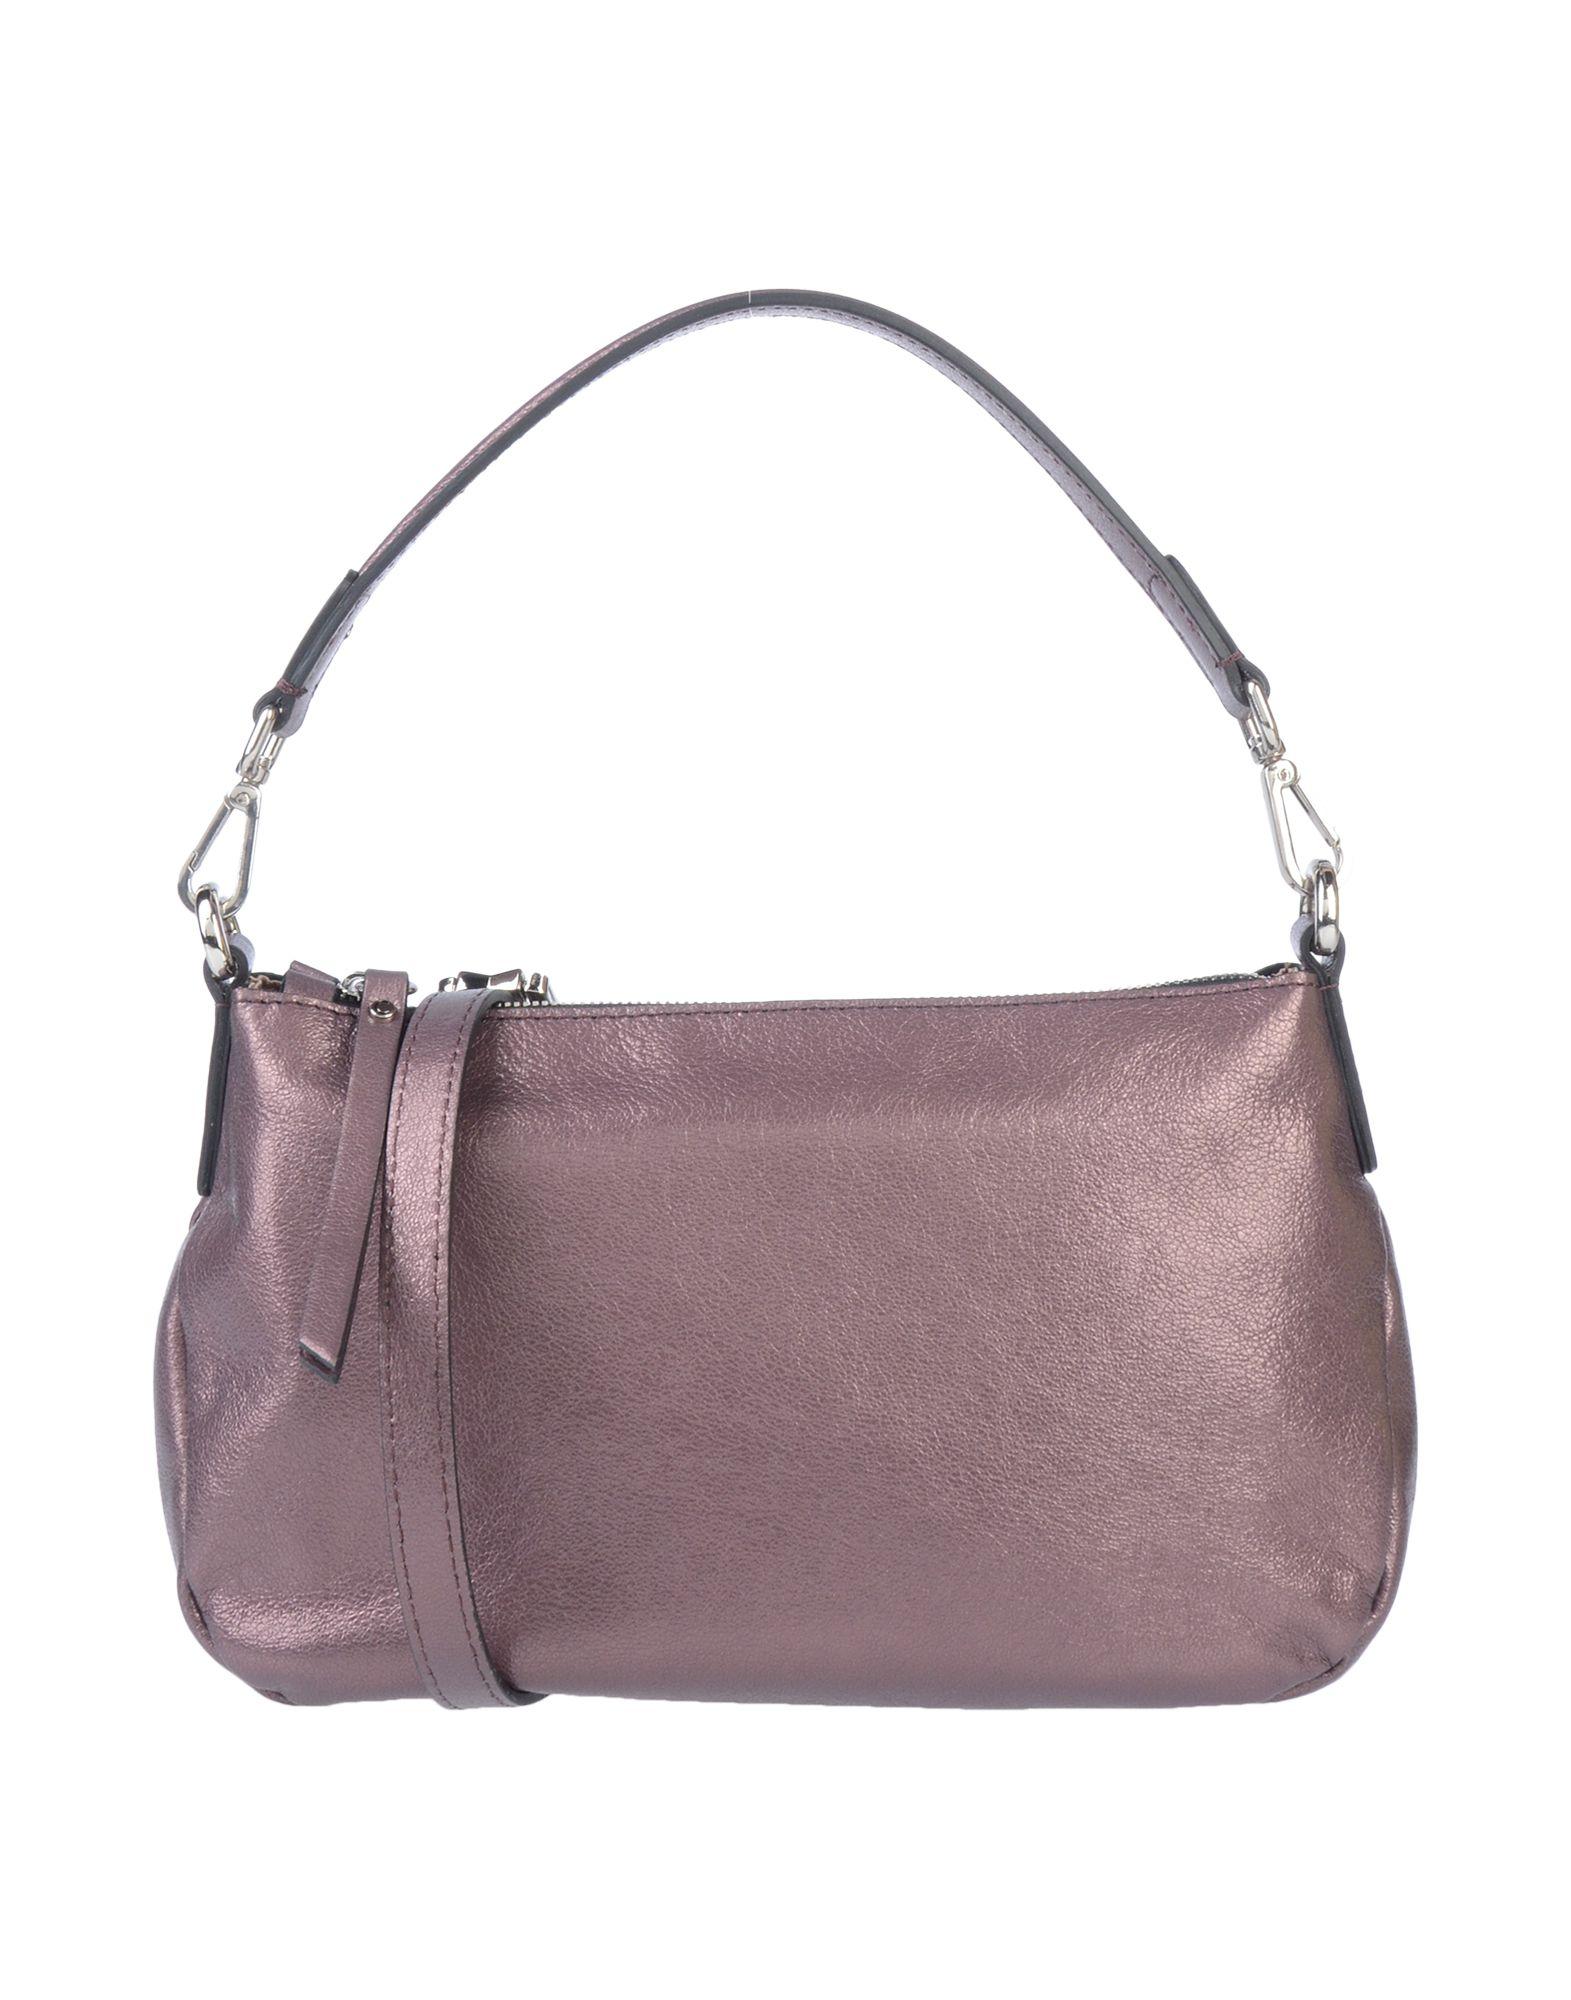 Gianni Chiarini Handbag in Purple - Lyst